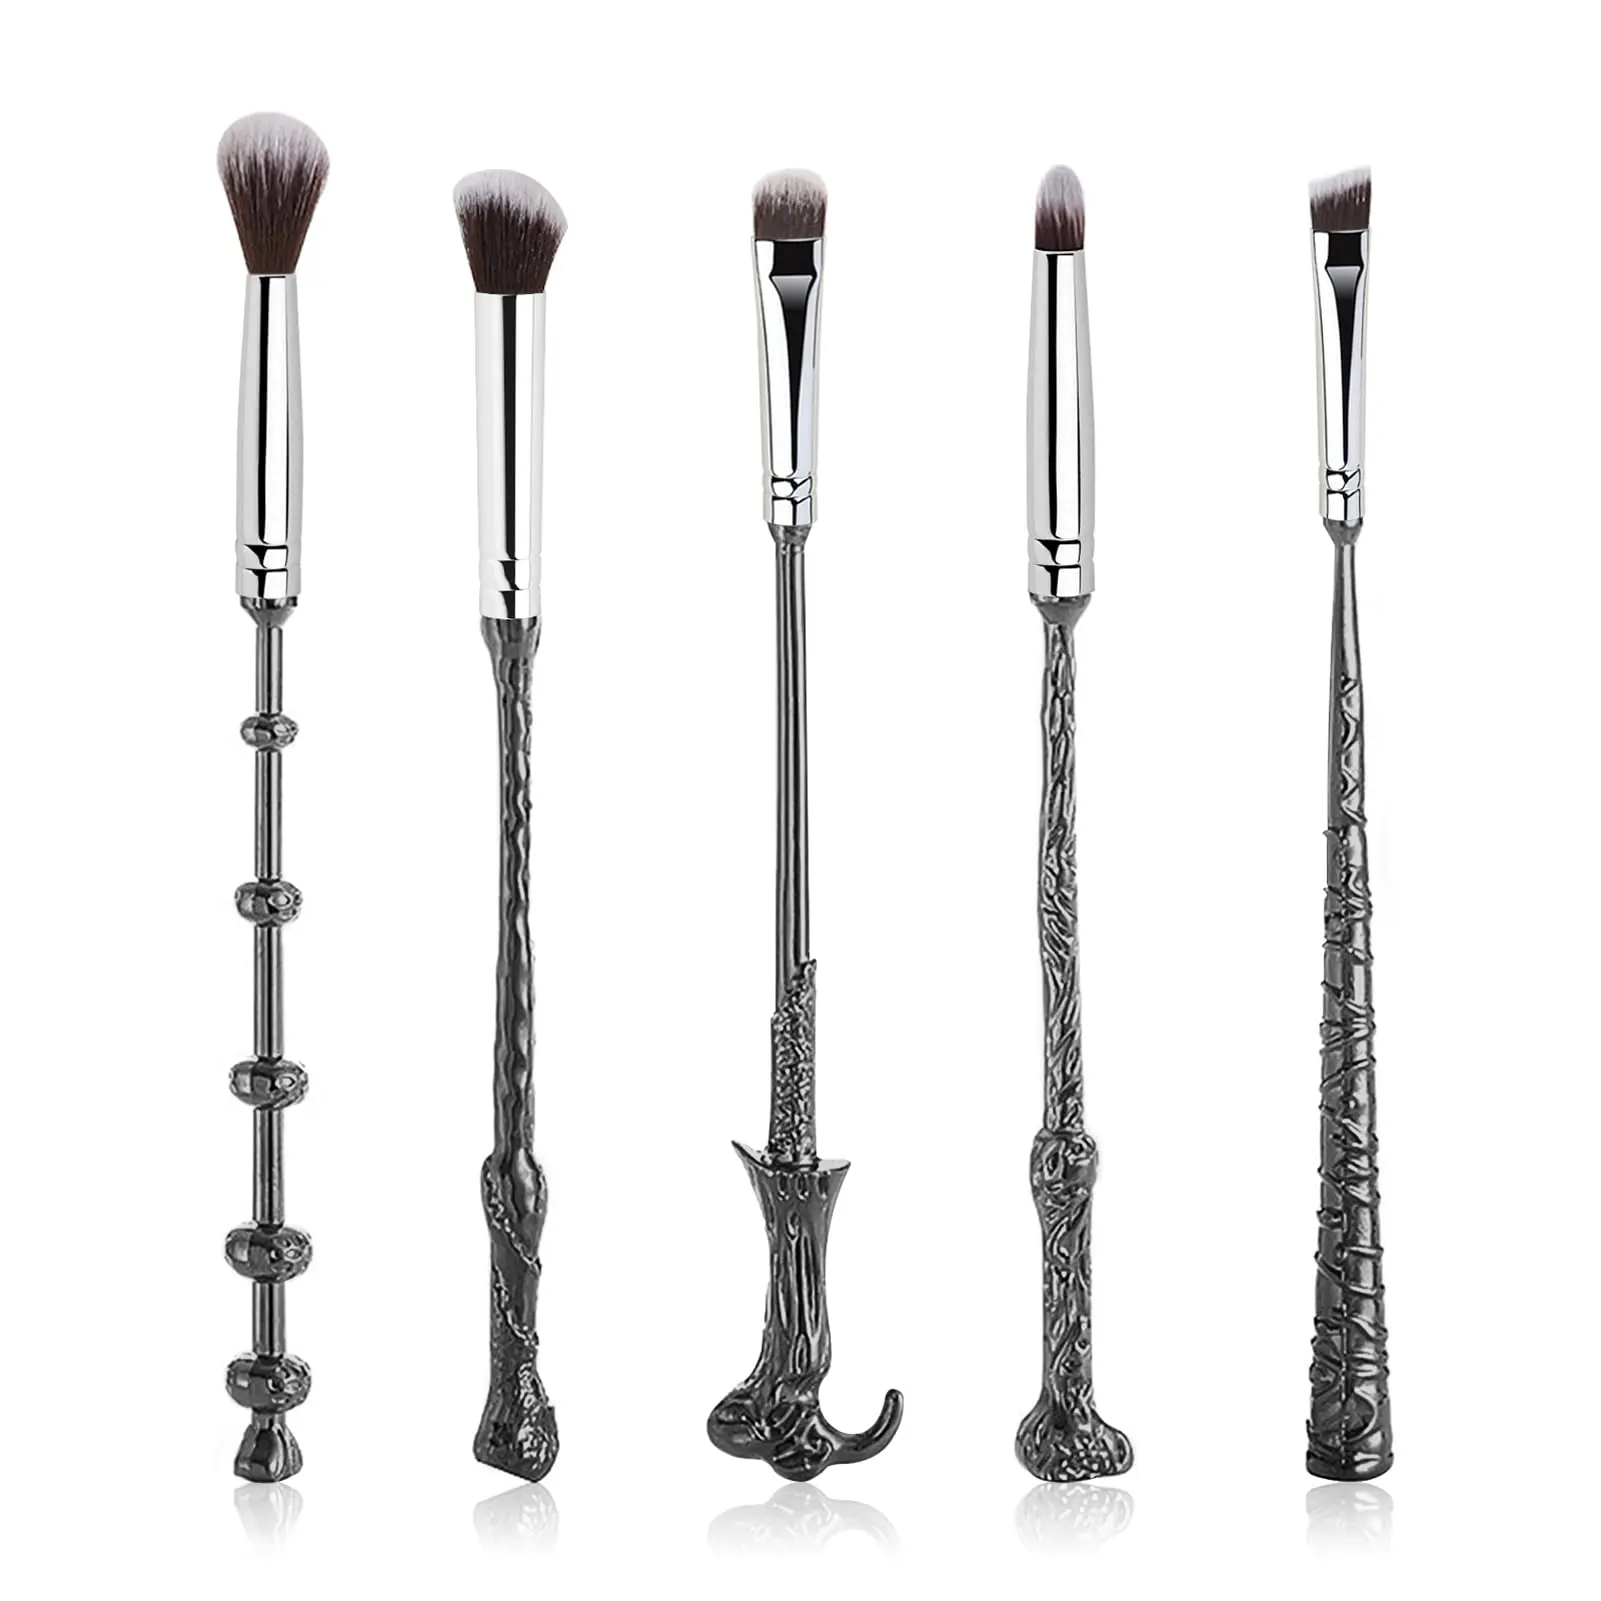 

5 Pcs Wizard Wand Makeup Brushes Wechip Premium Synthetic Makeup Brushes Magical Metal Brush For Foundation Blending Blush